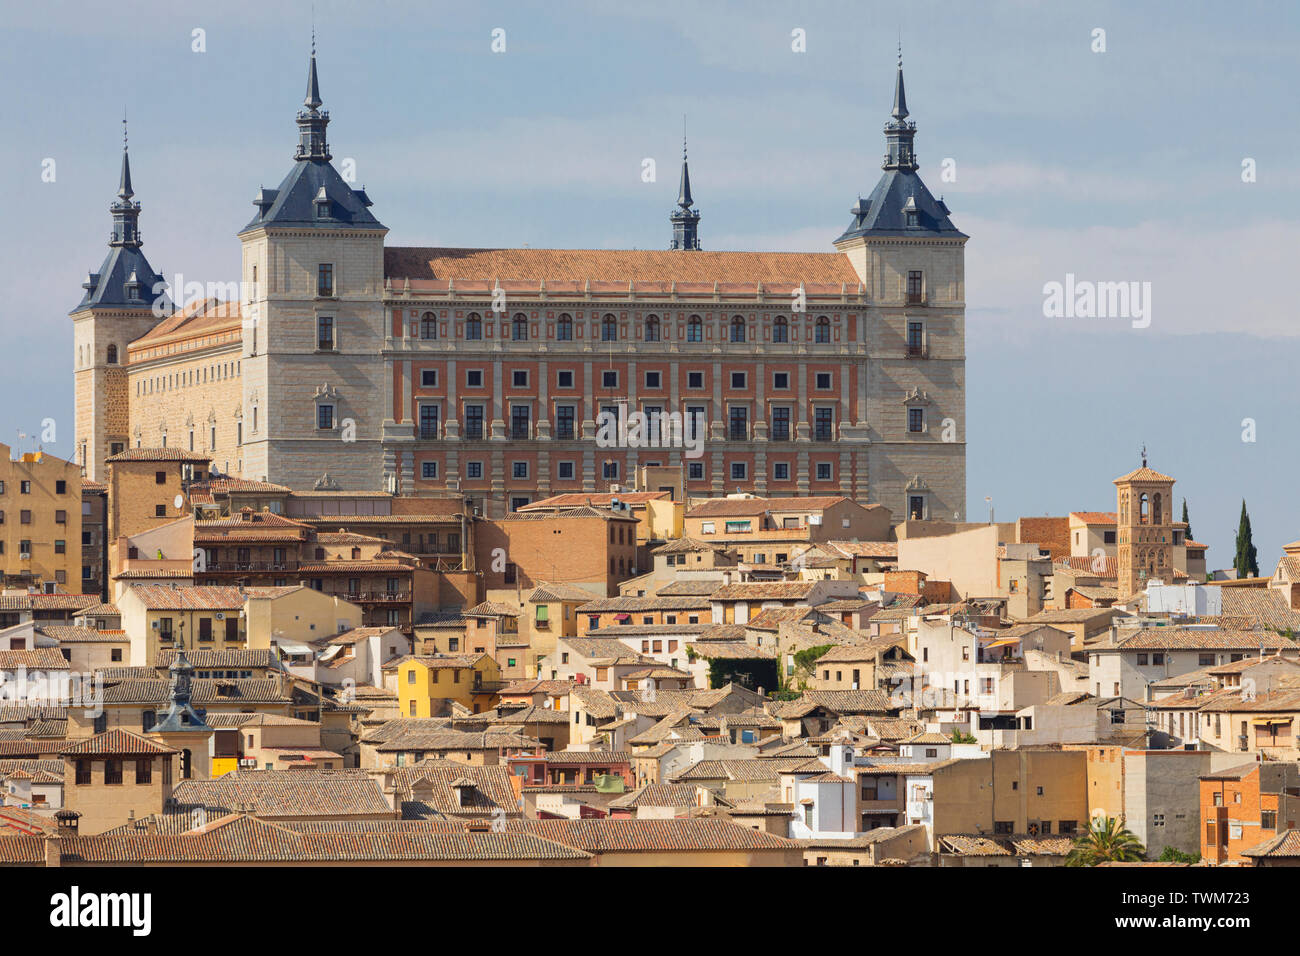 The Alcazar, Toledo, Toledo Province, Castilla-La Mancha Spain.   Toledo is a UNESCO World Heritage Site. Stock Photo